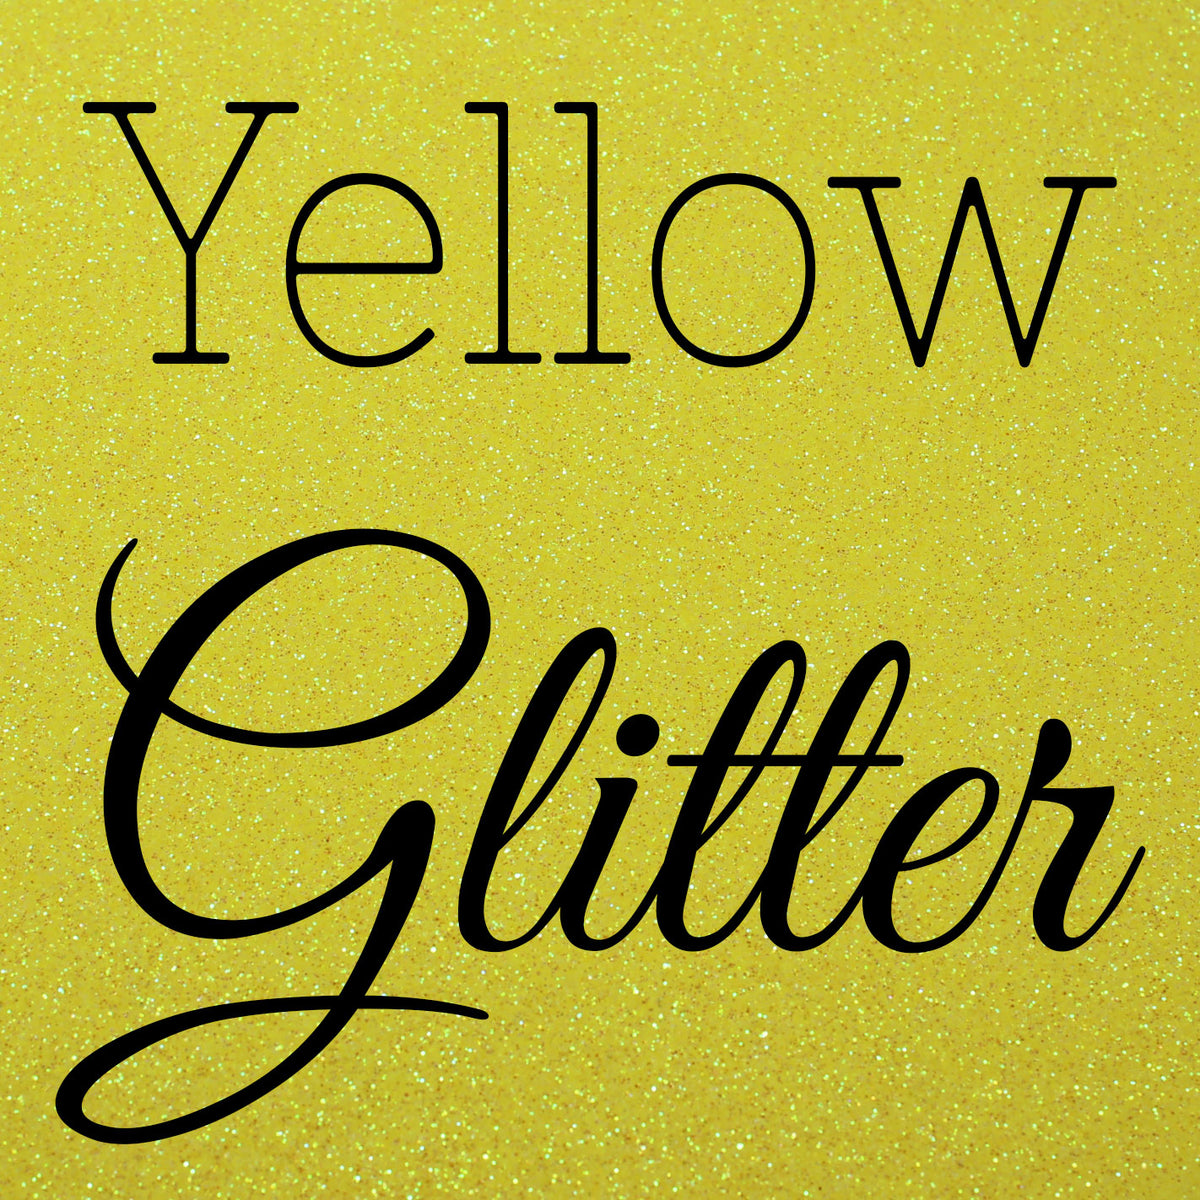 Yellow Glitter